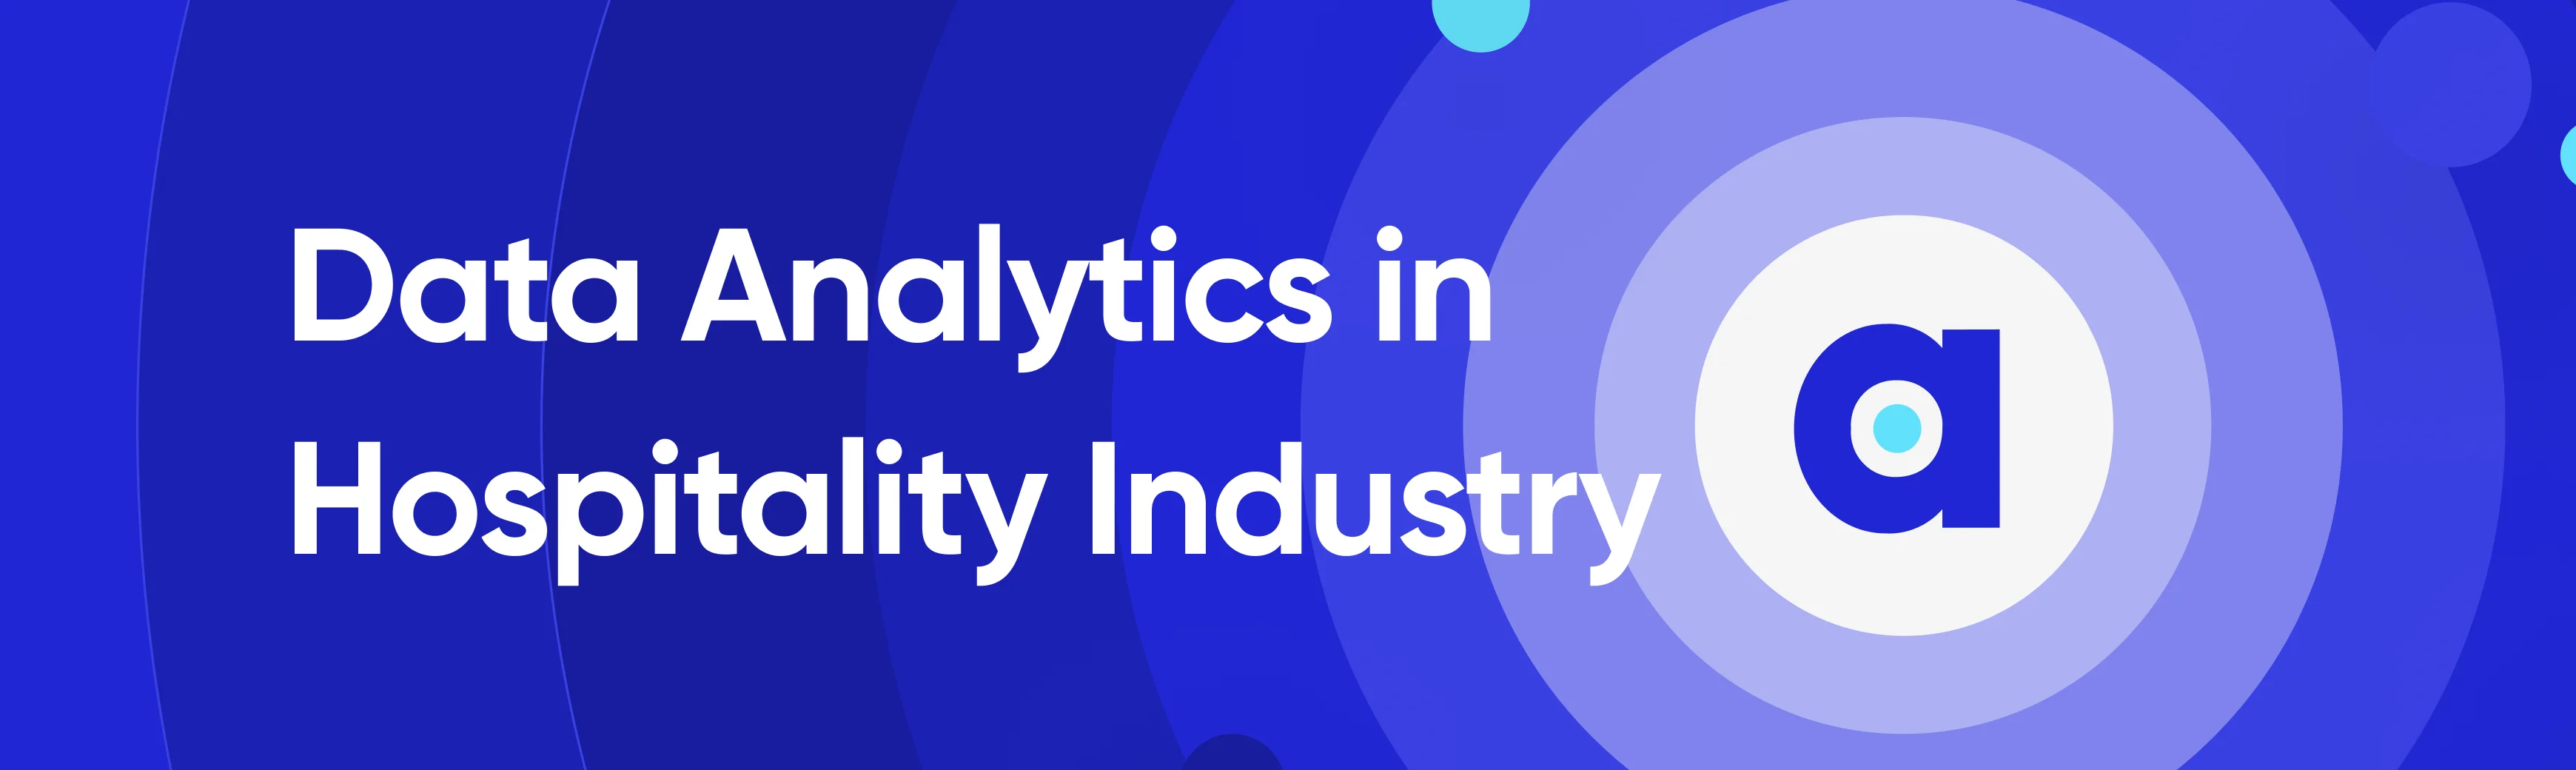 Data Analytics in Hospitality Industry